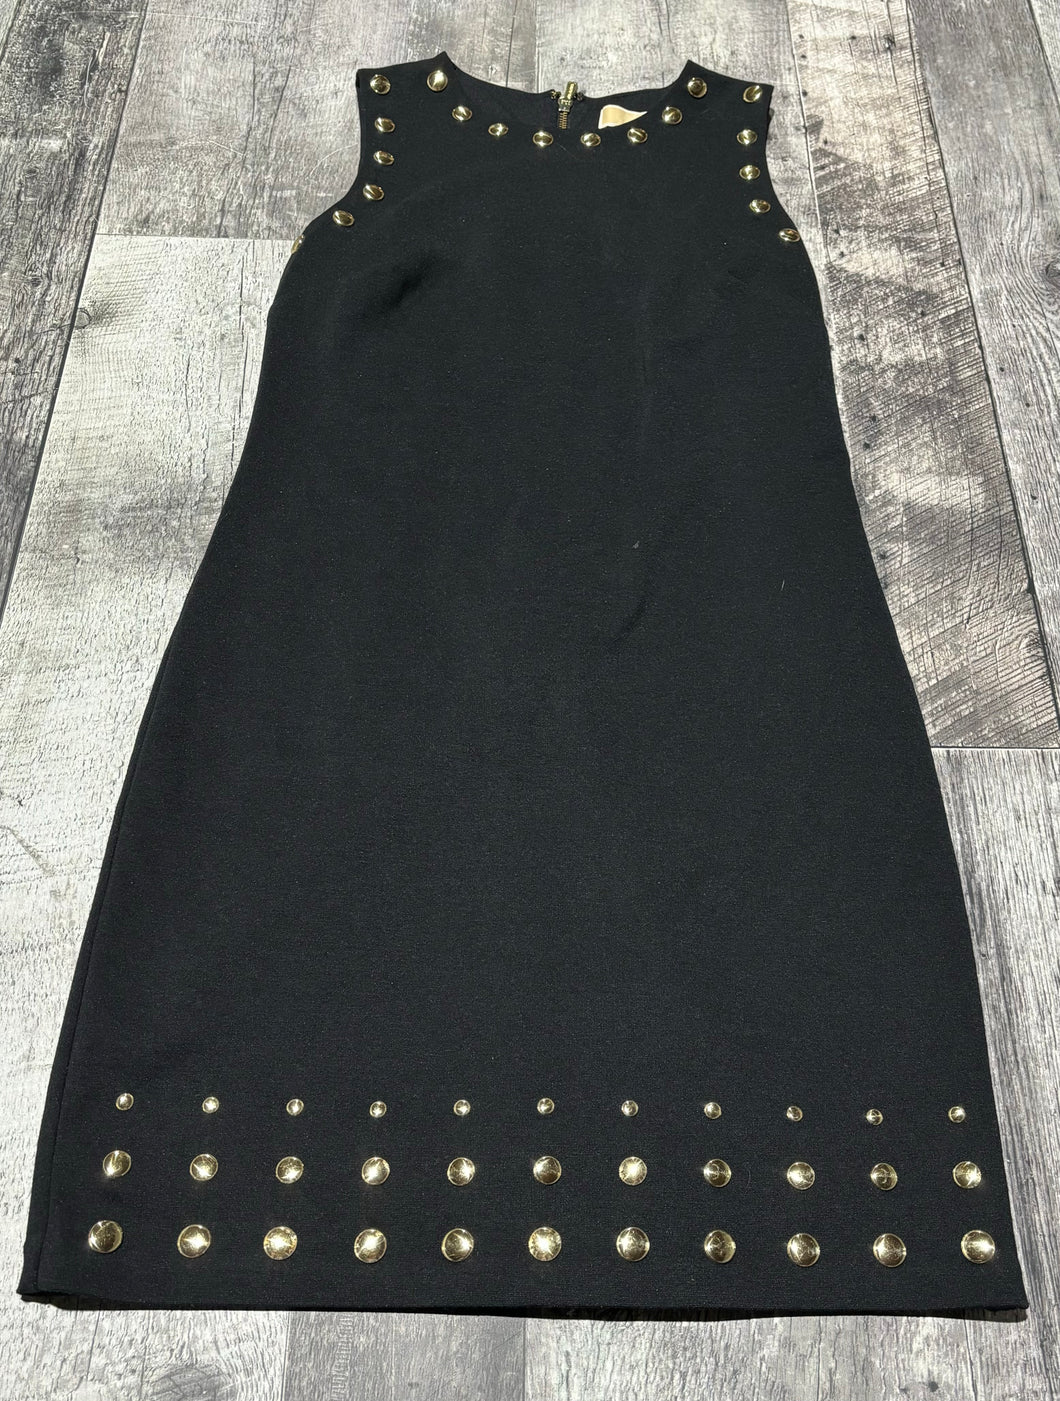 Michael Kors black/gold dress - Hers size S